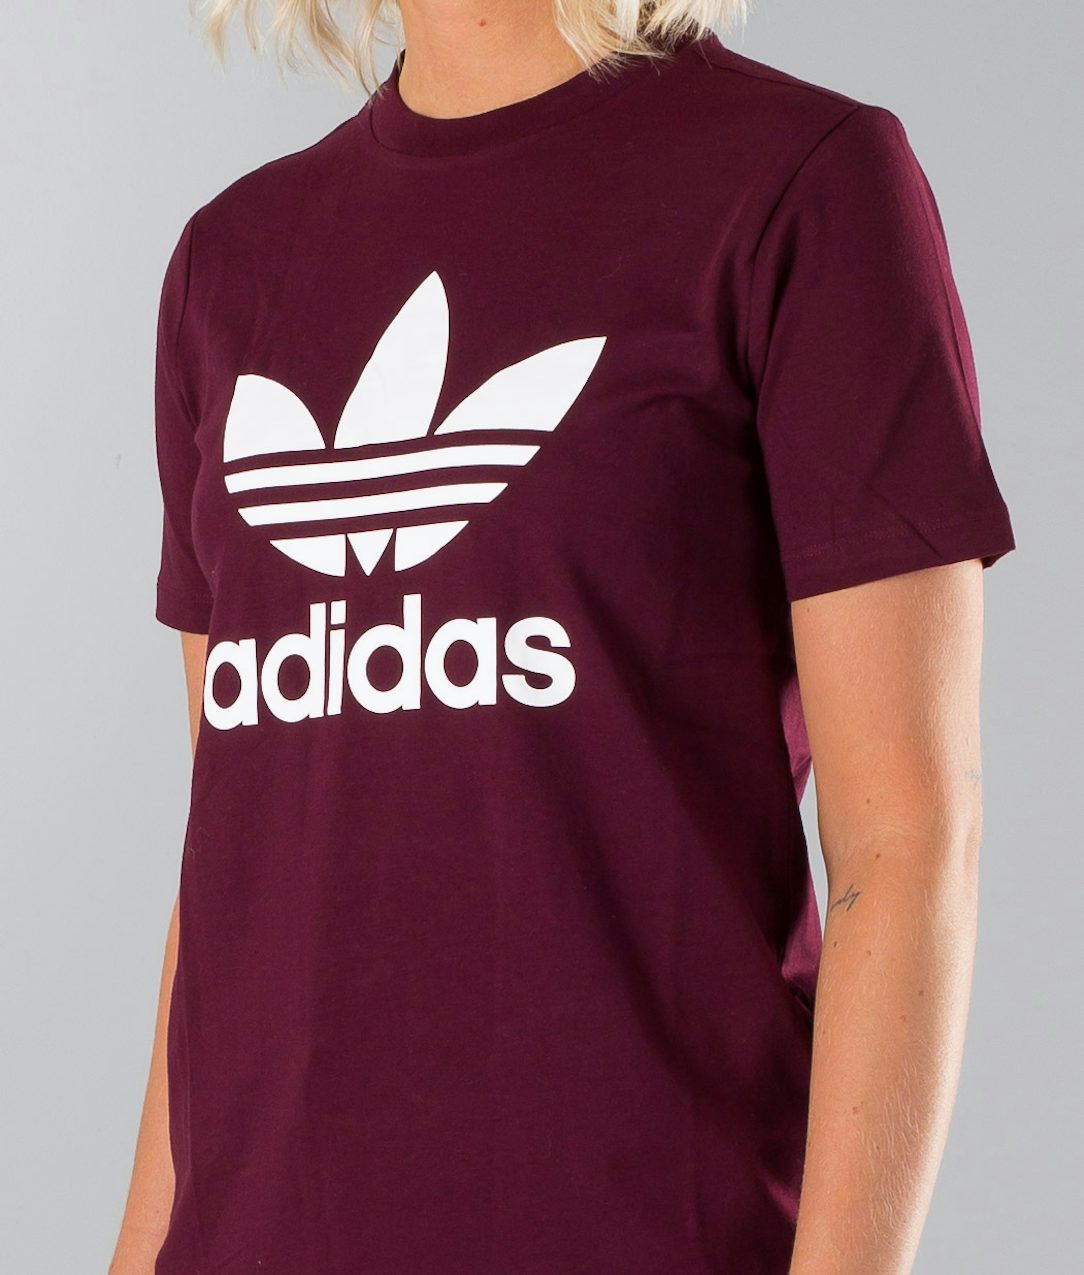 Adidas Originals Trefoil T Shirt Maroon Ridestore Com